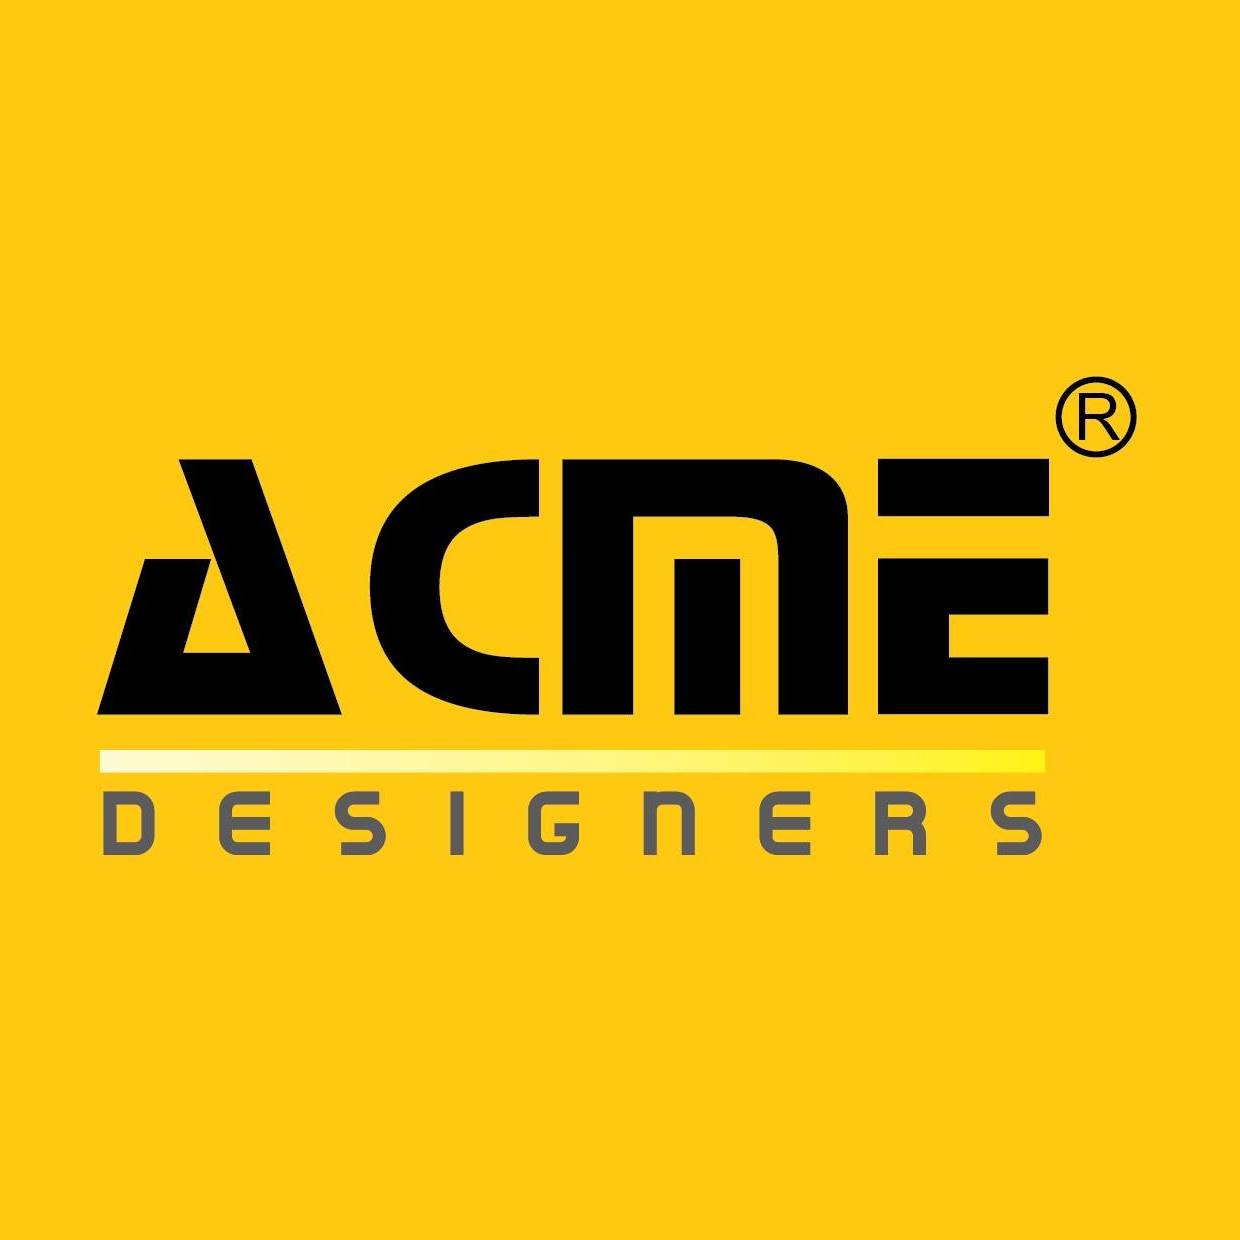 Acme Designers|IT Services|Professional Services